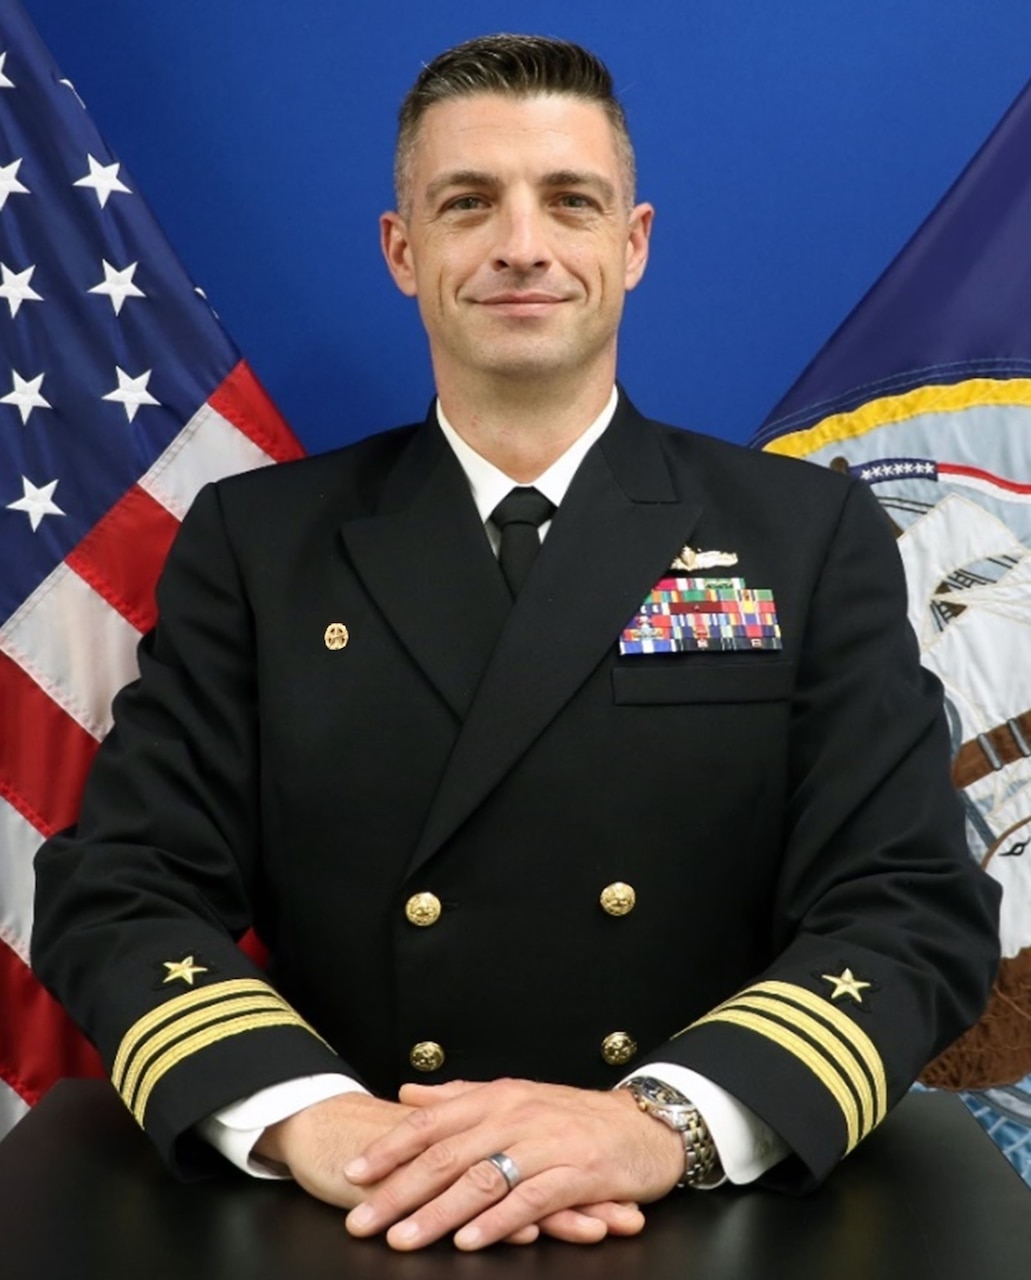 Commander James D. Hostetler